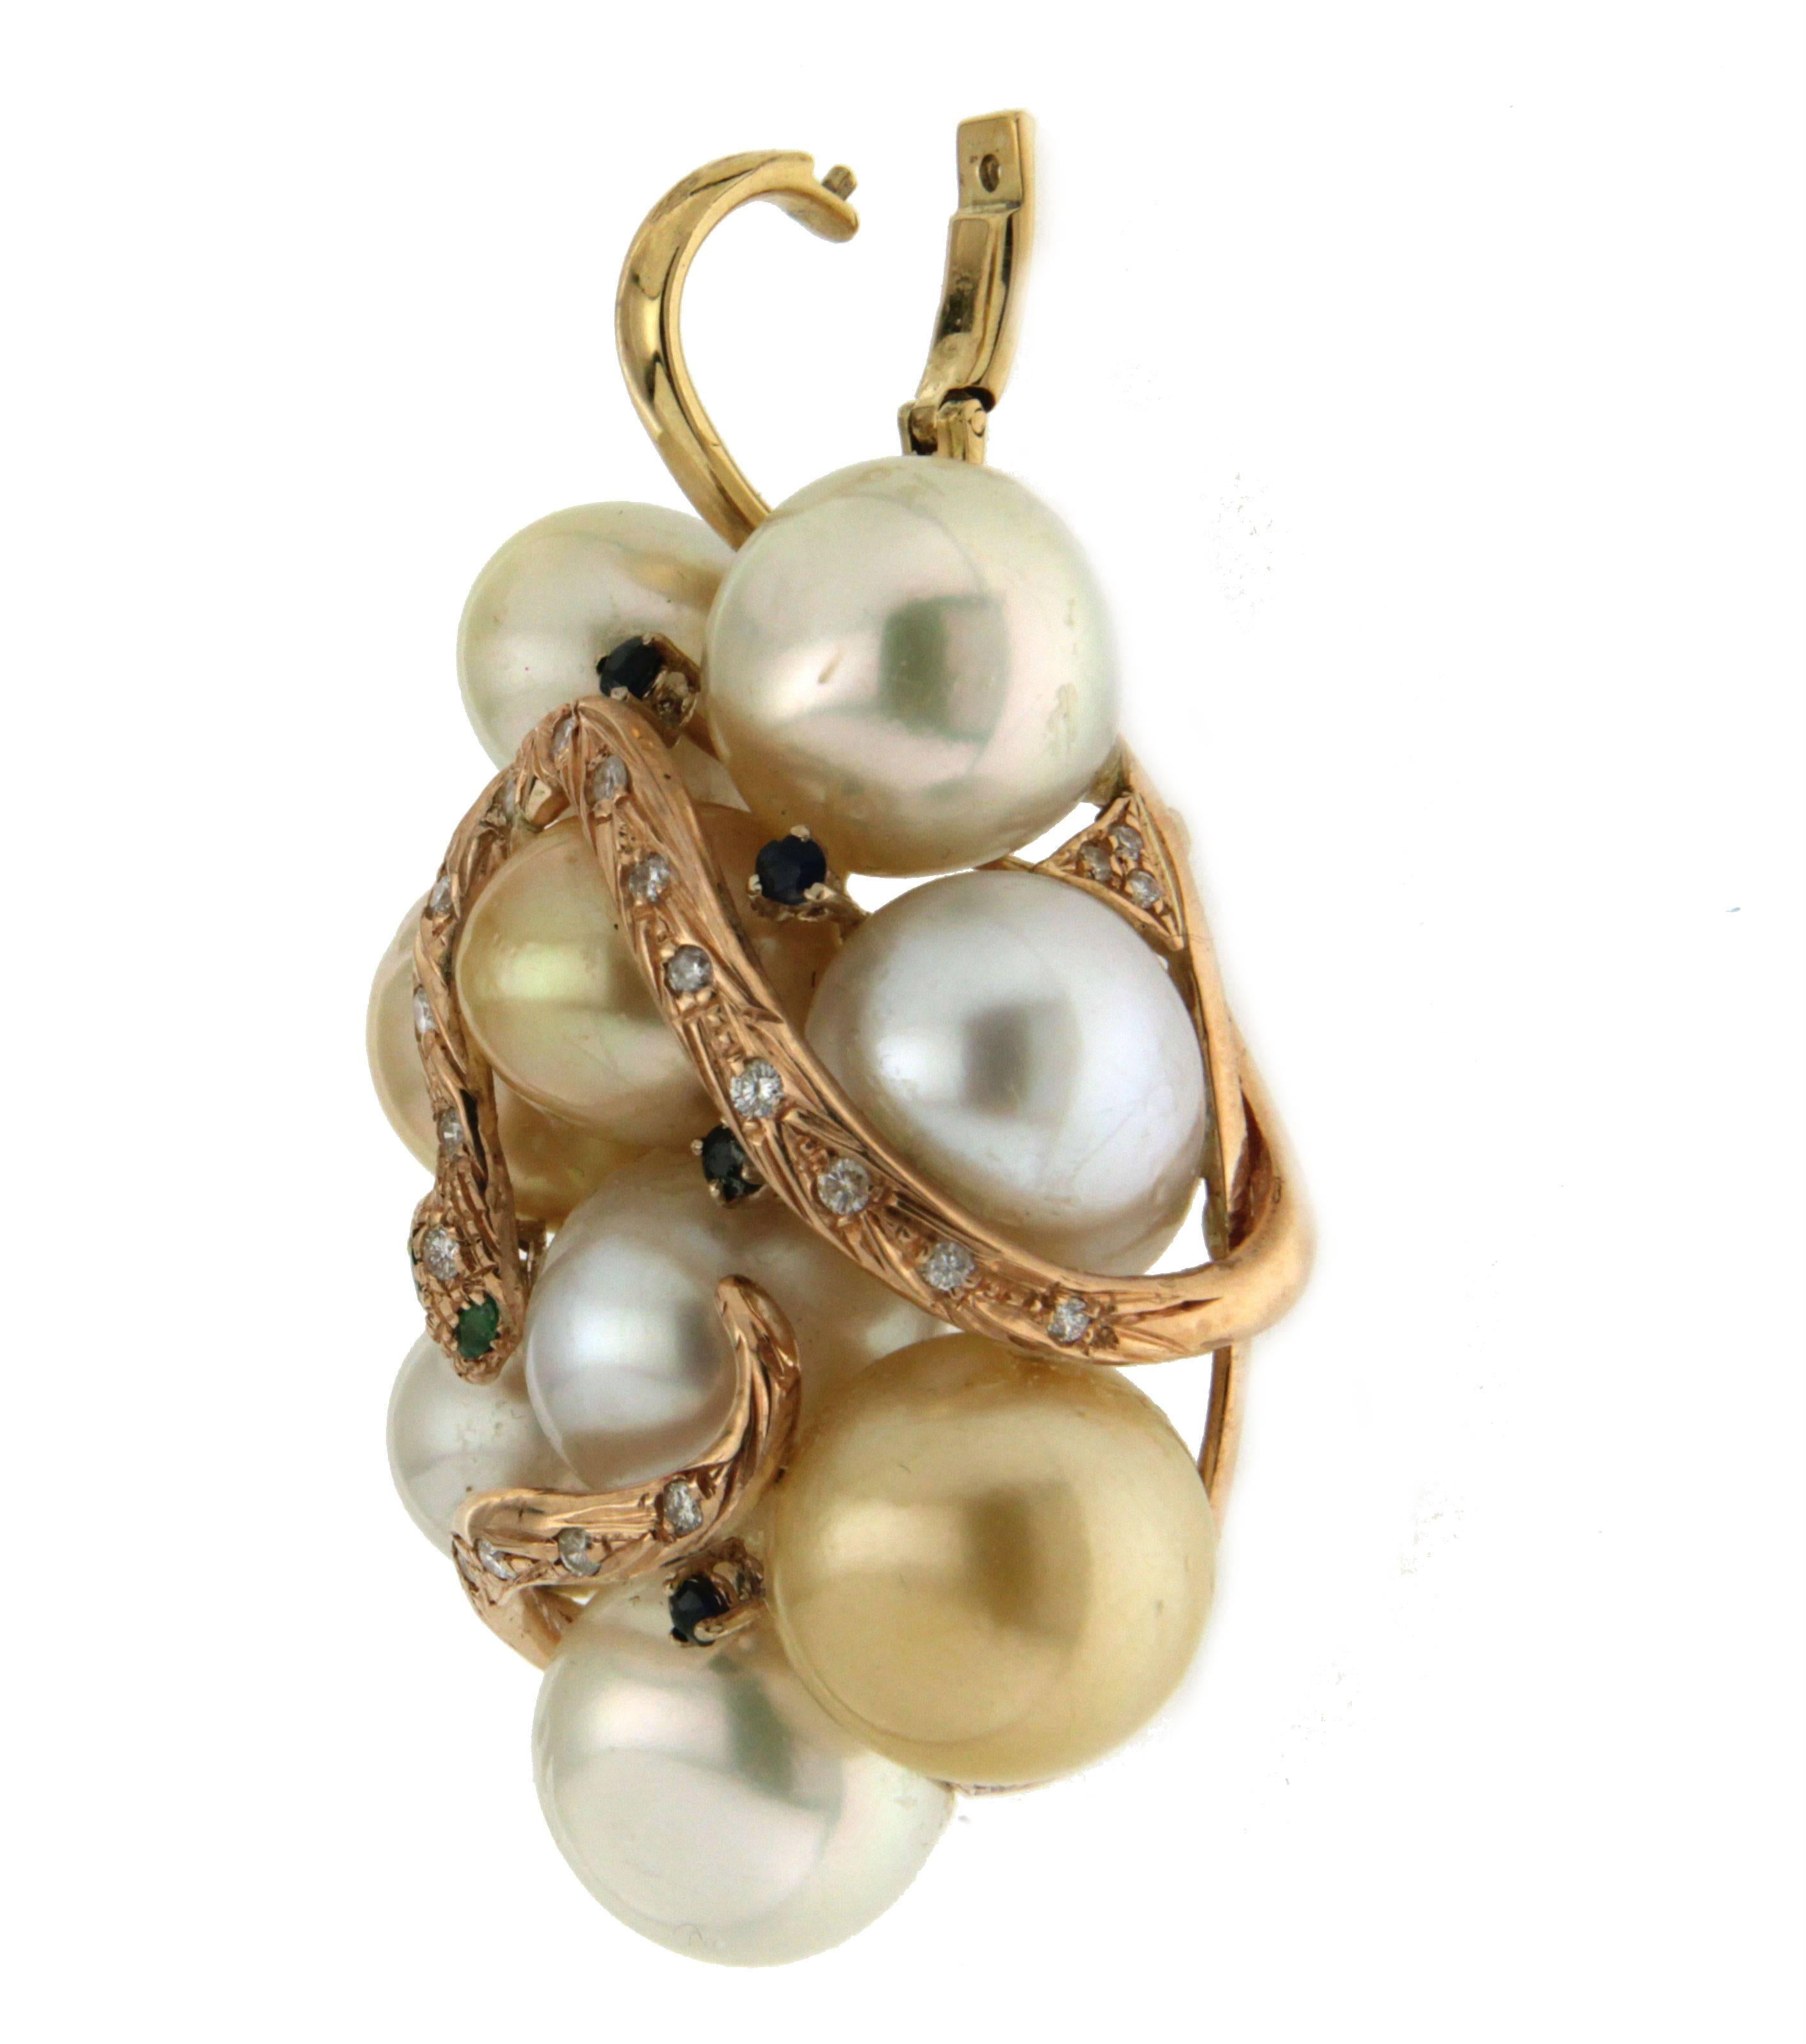 Brilliant Cut Handcraft Snake 14 Karat Yellow Gold Diamonds Sapphires Pearls Pendant Necklace For Sale